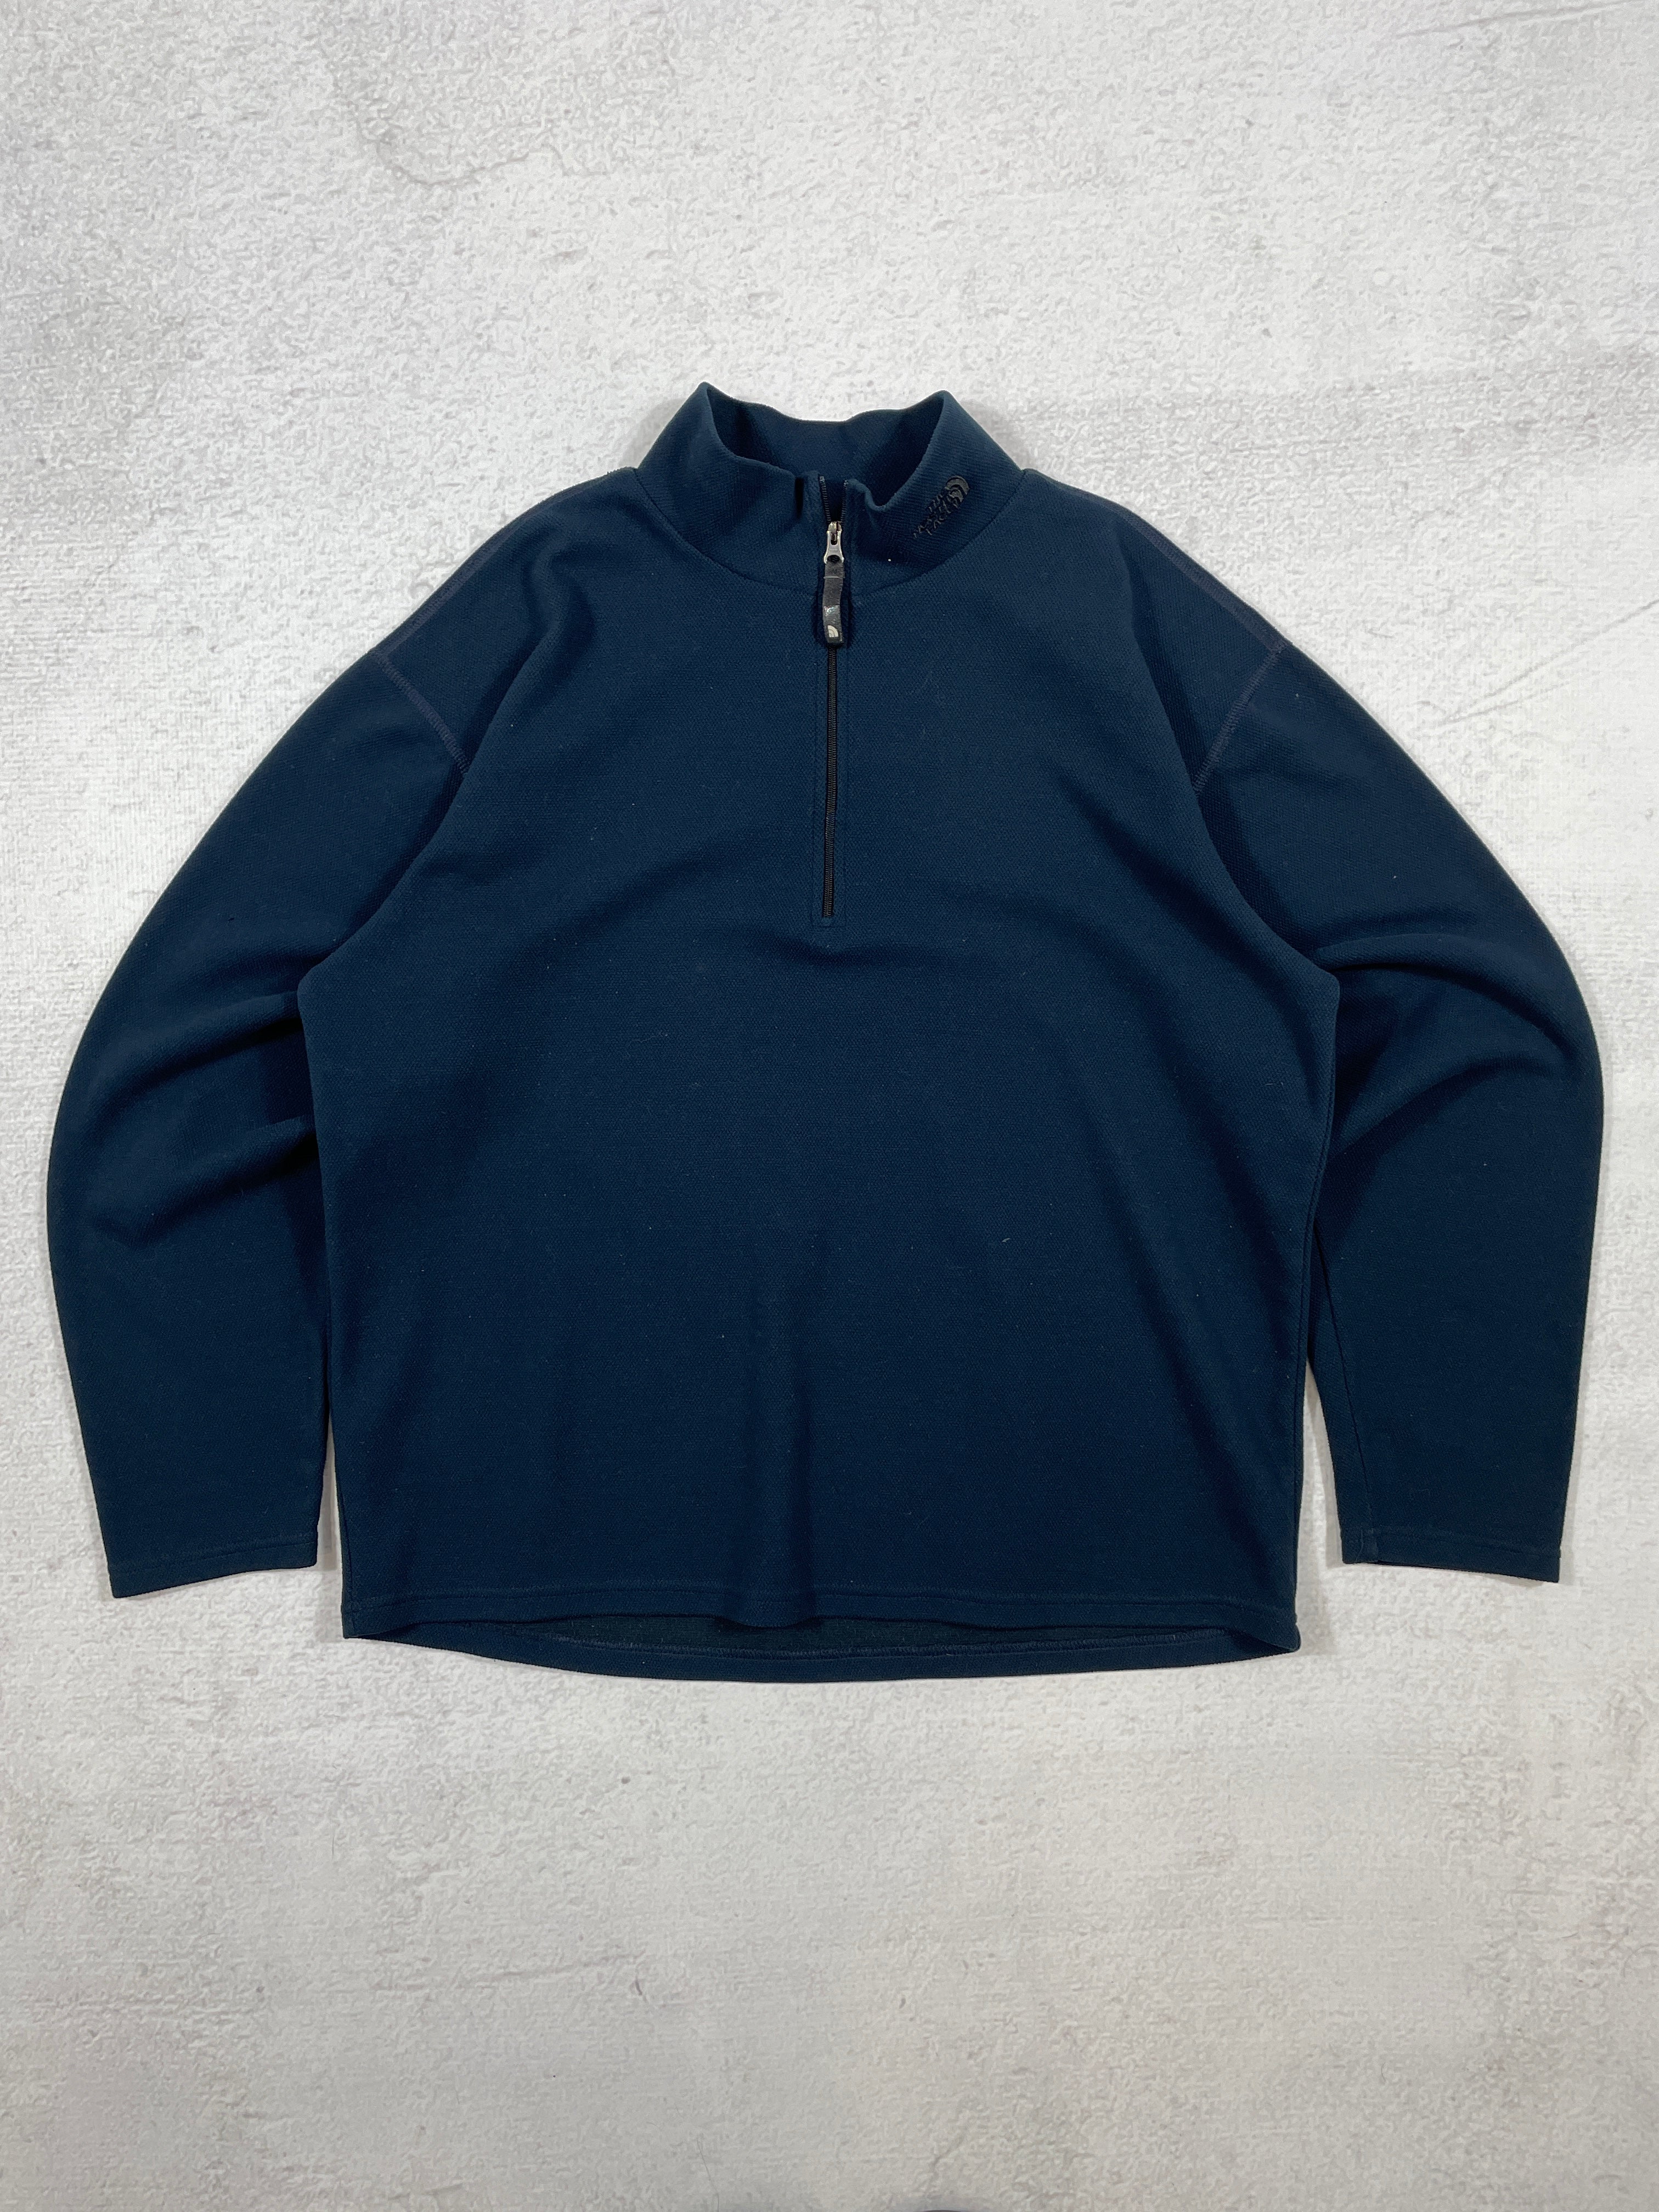 Vintage The North Face Sweatshirt - Men's Medium